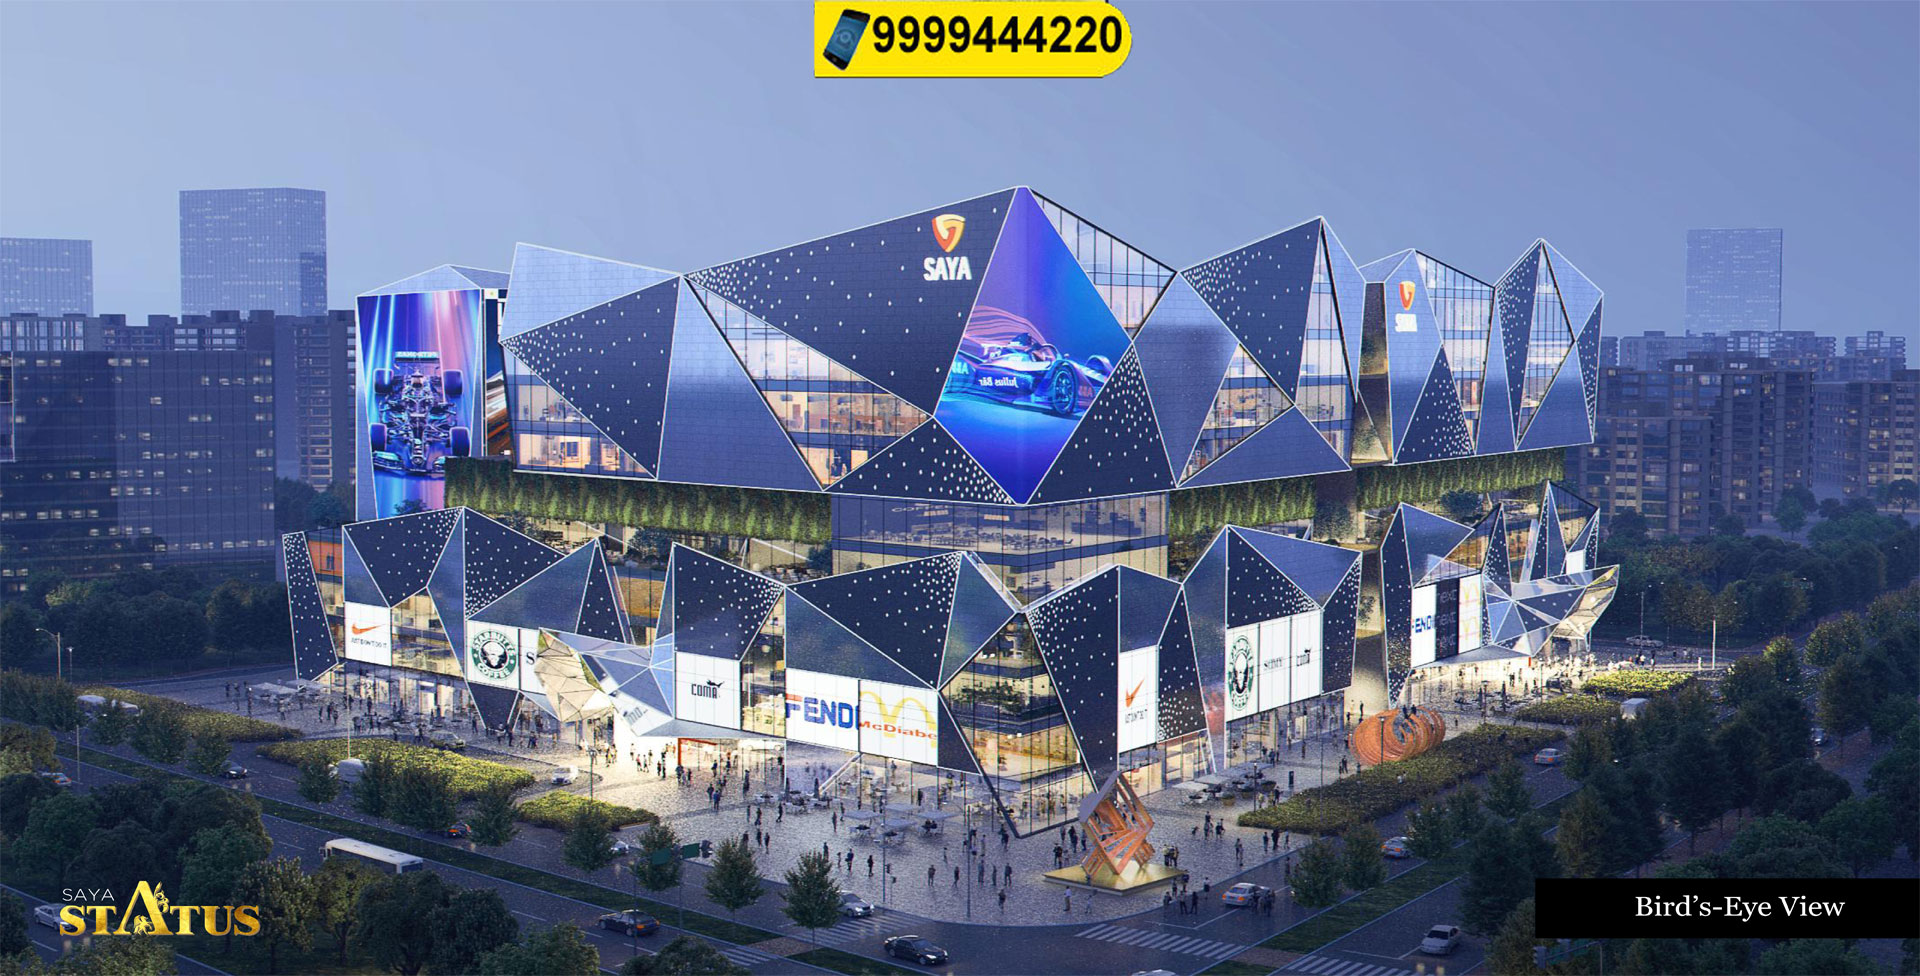 New Launch Saya Status Mall, Saya Sector 129 Noida